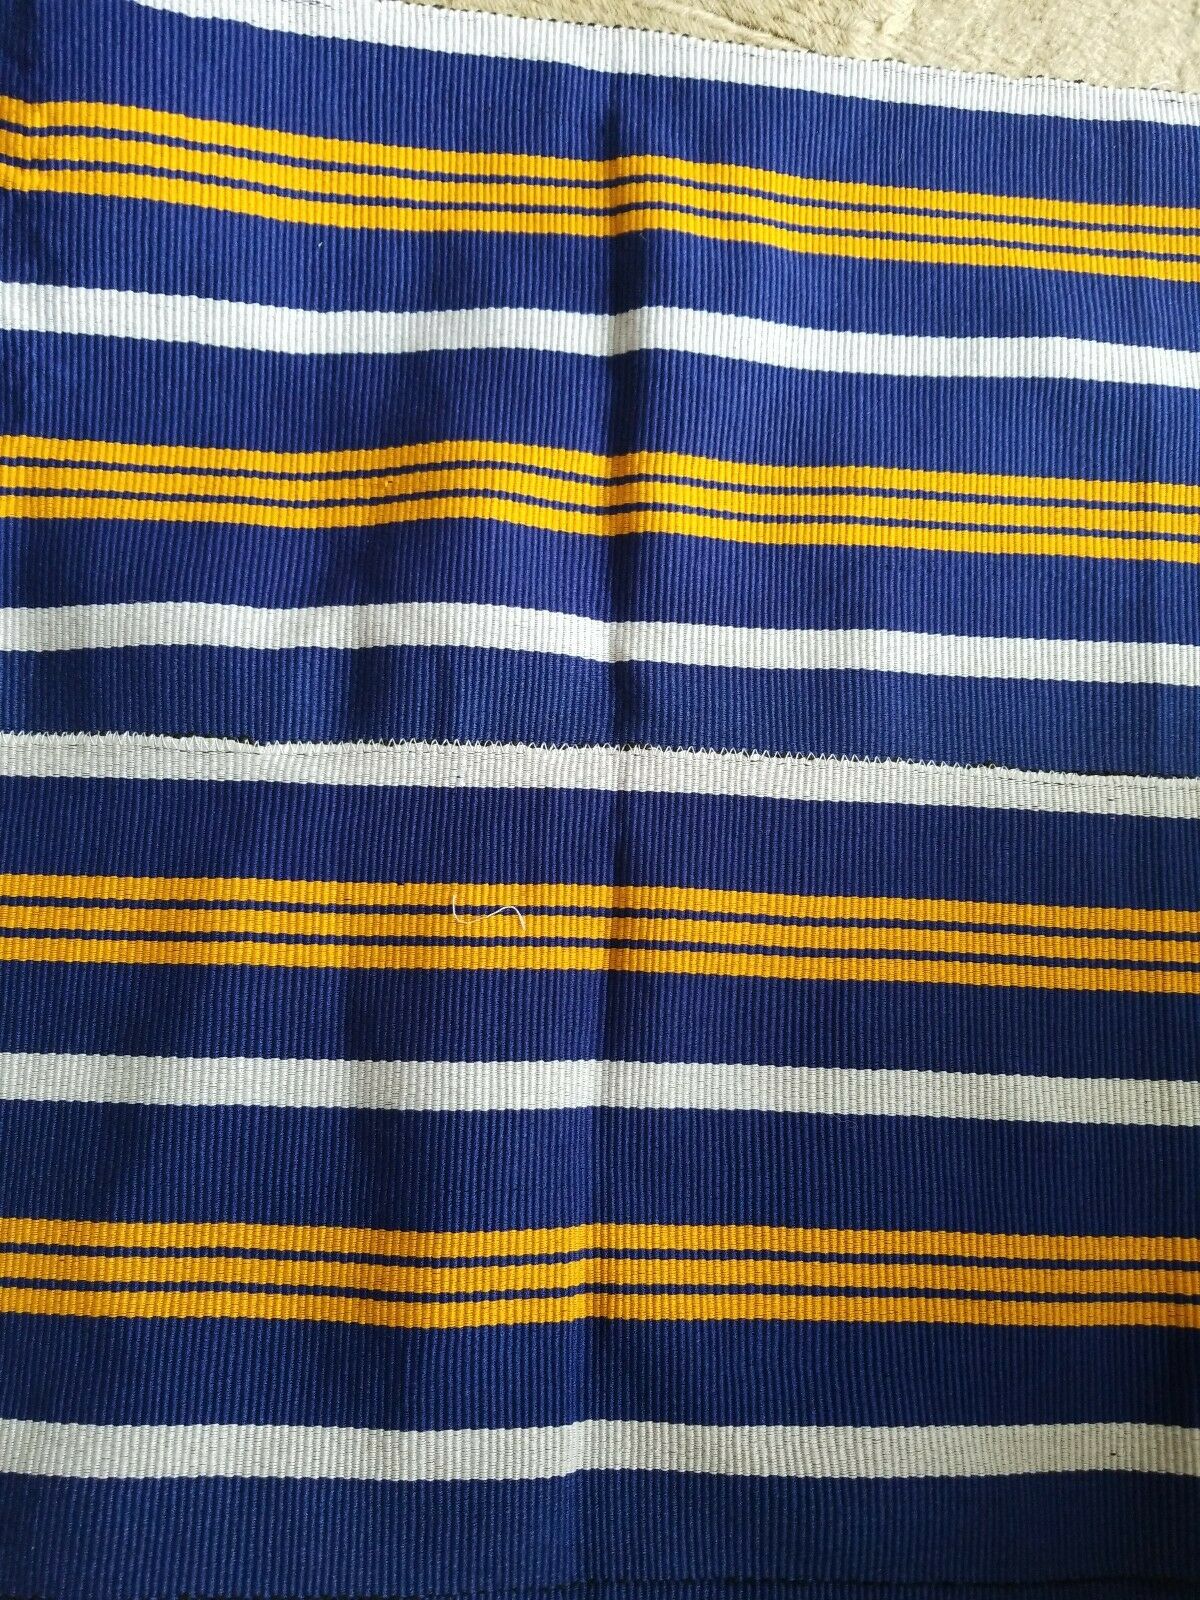 Faso Da Fani Fabric From Boukina Faso~Blue Yellow &white 52"×75"